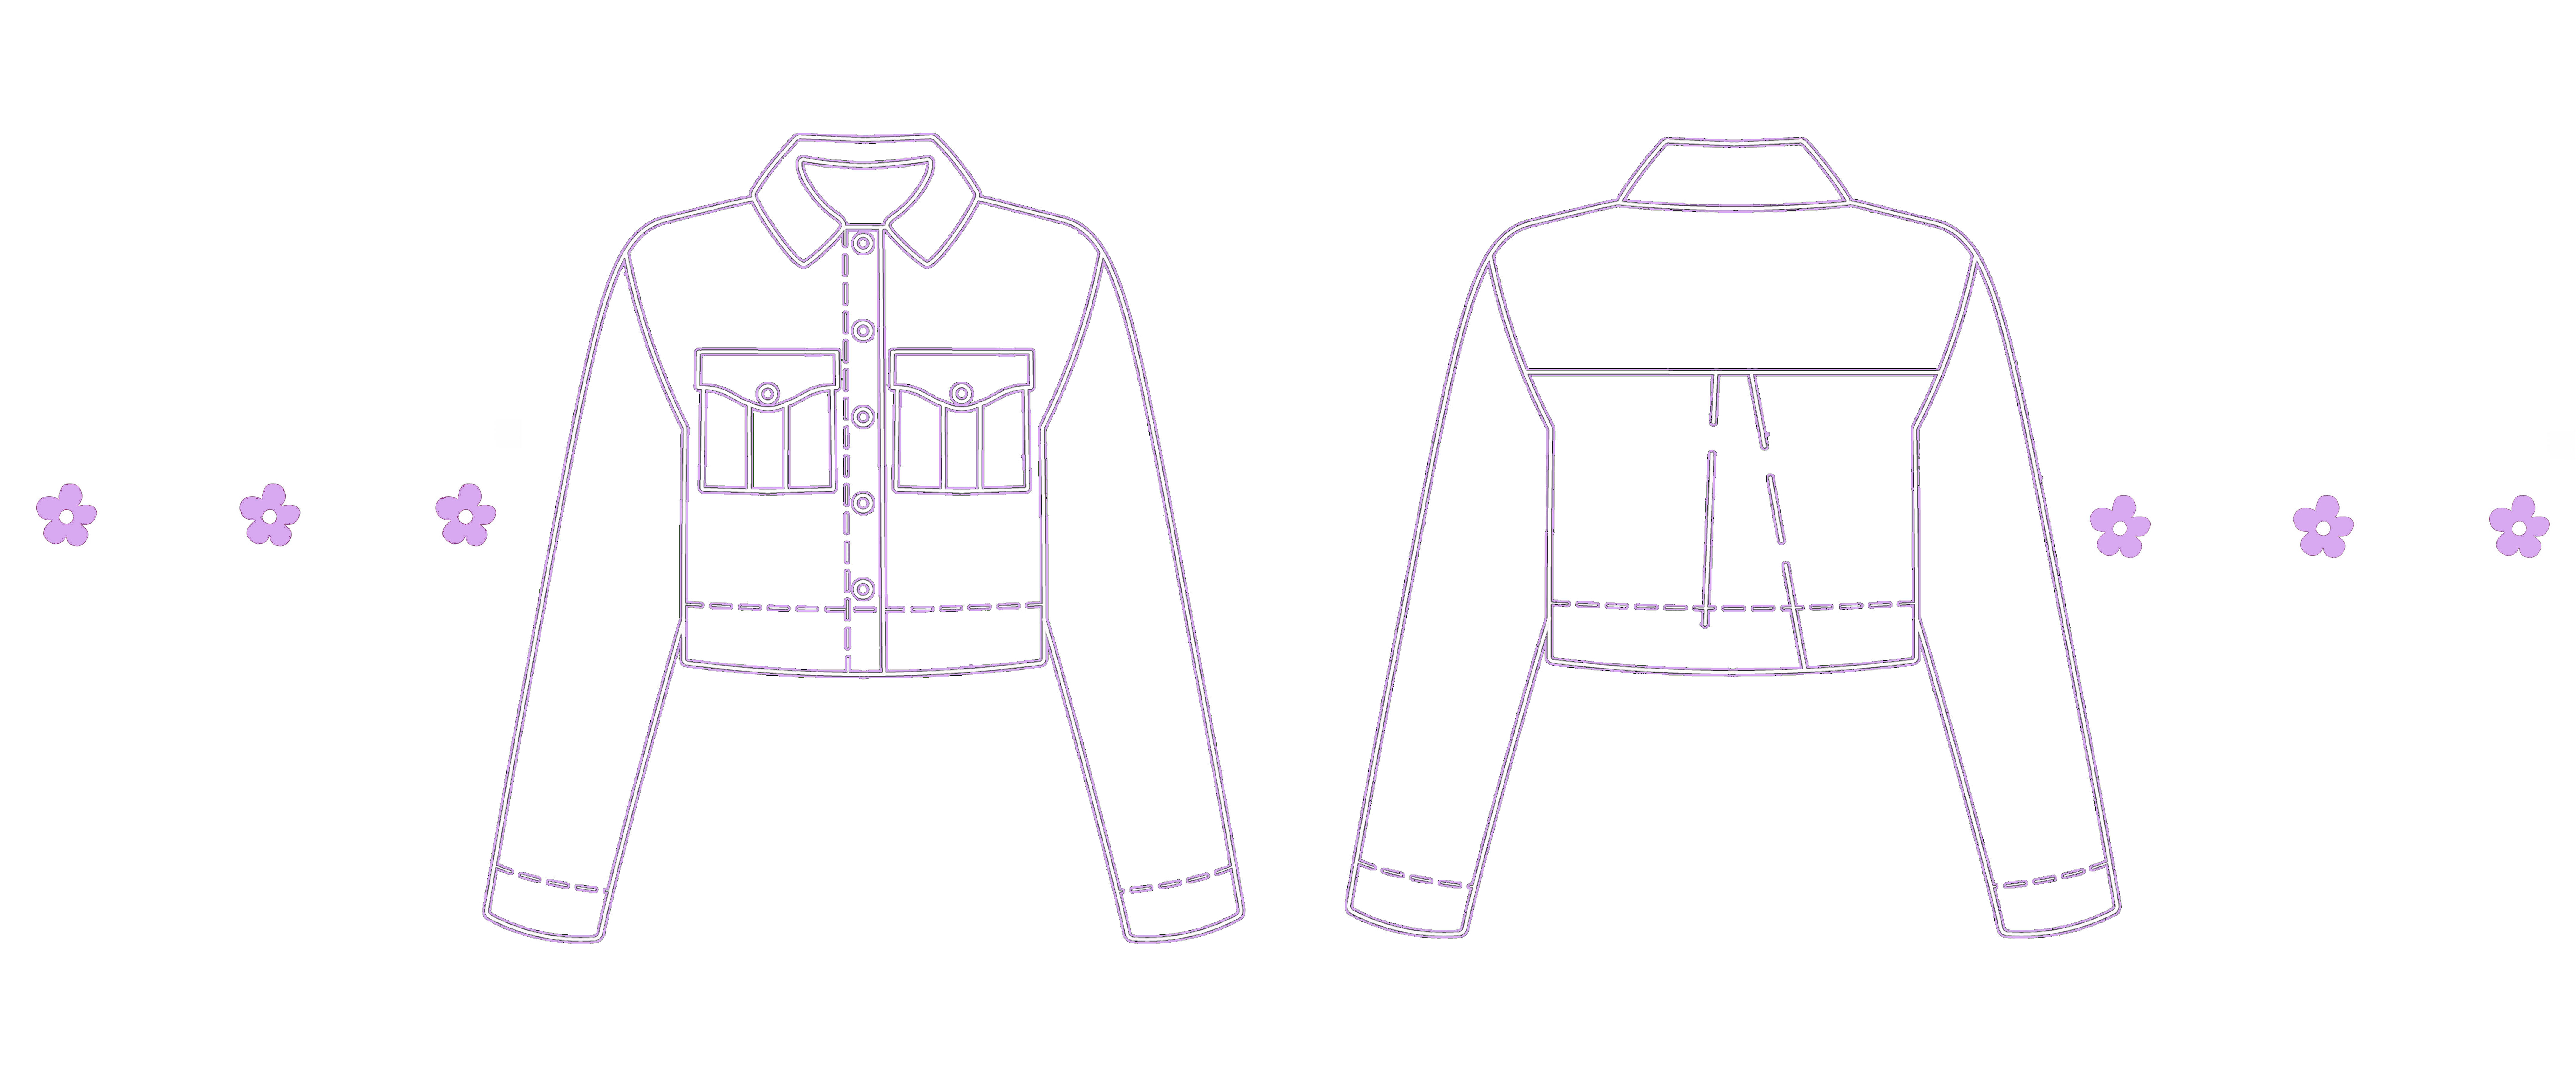 829-carlson-jacket-1.jpg